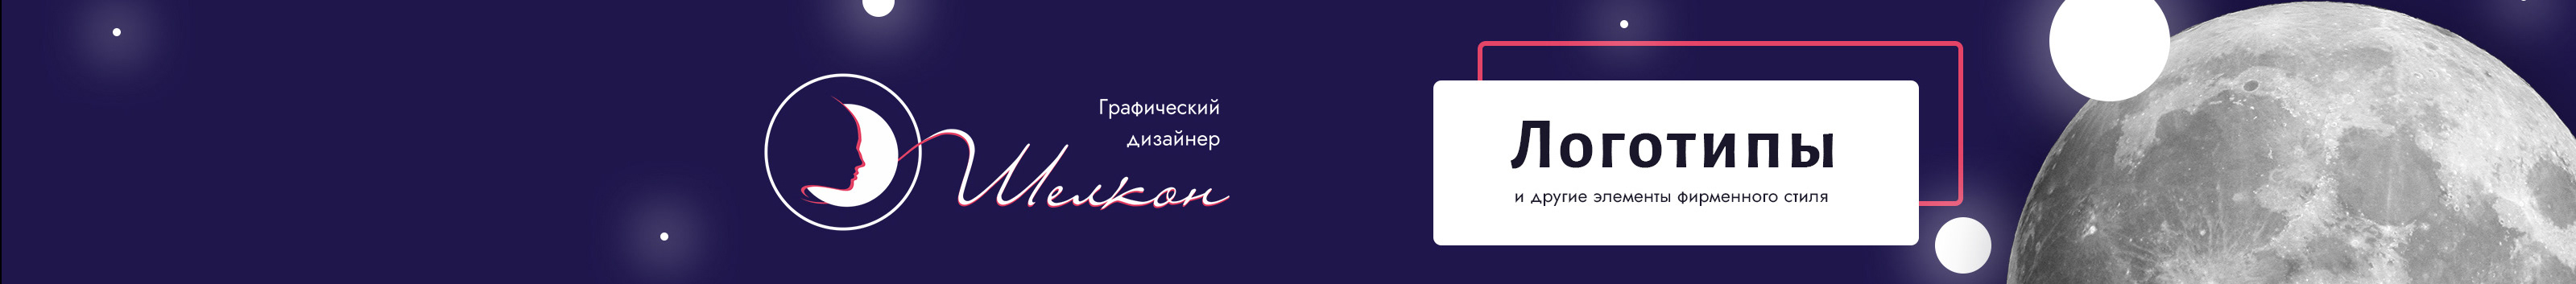 Елена Шелкон's profile banner